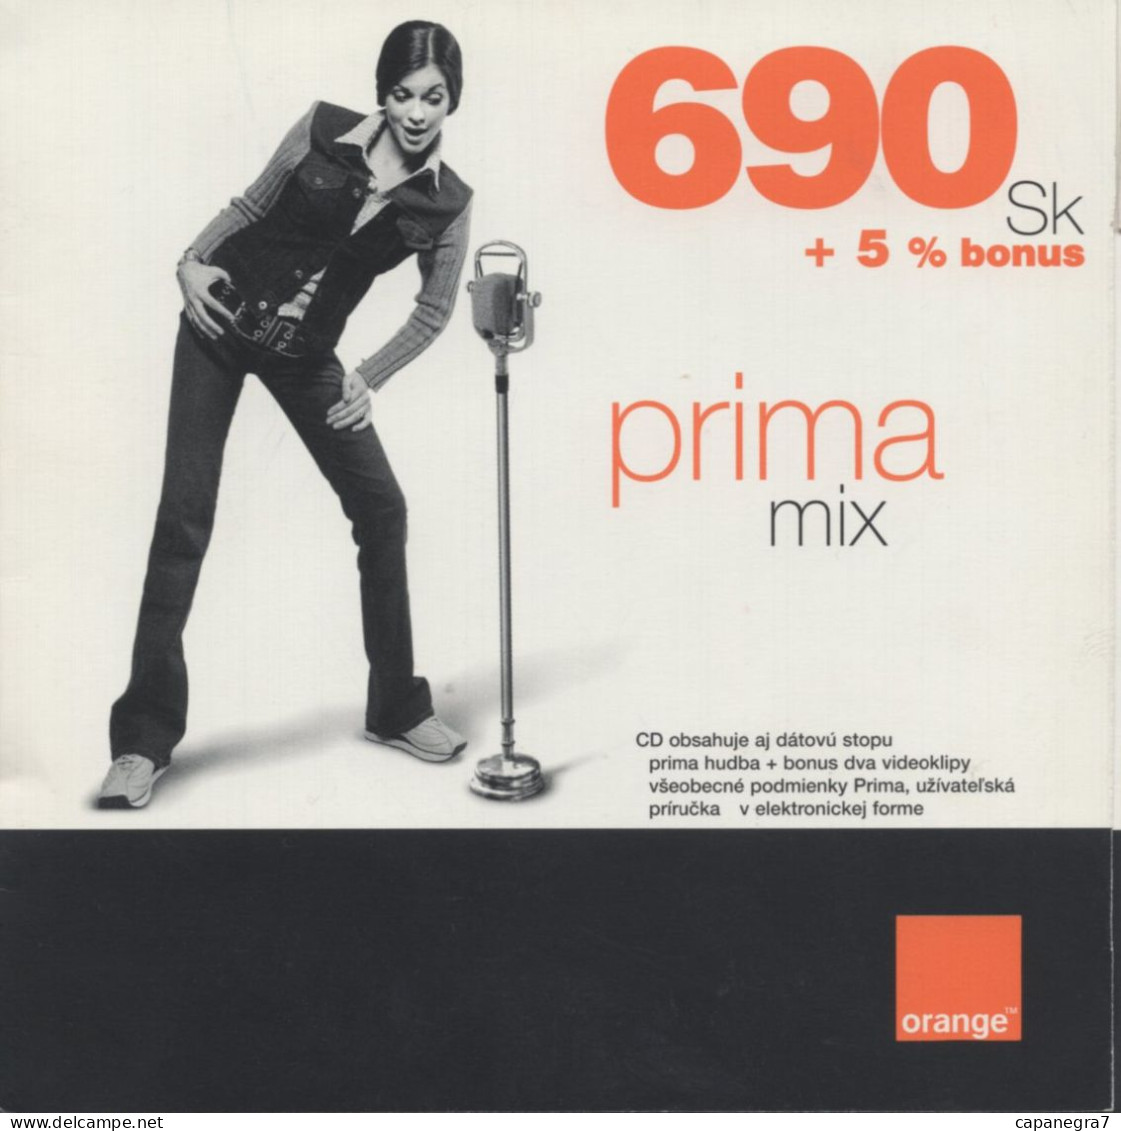 Prima Selection, Prima Mix 690 Sk, Polycarbonate Plastic CD, GSM Refill, Orange Slovakia, Validity 30.06.2004, Slovakia - Slovakia